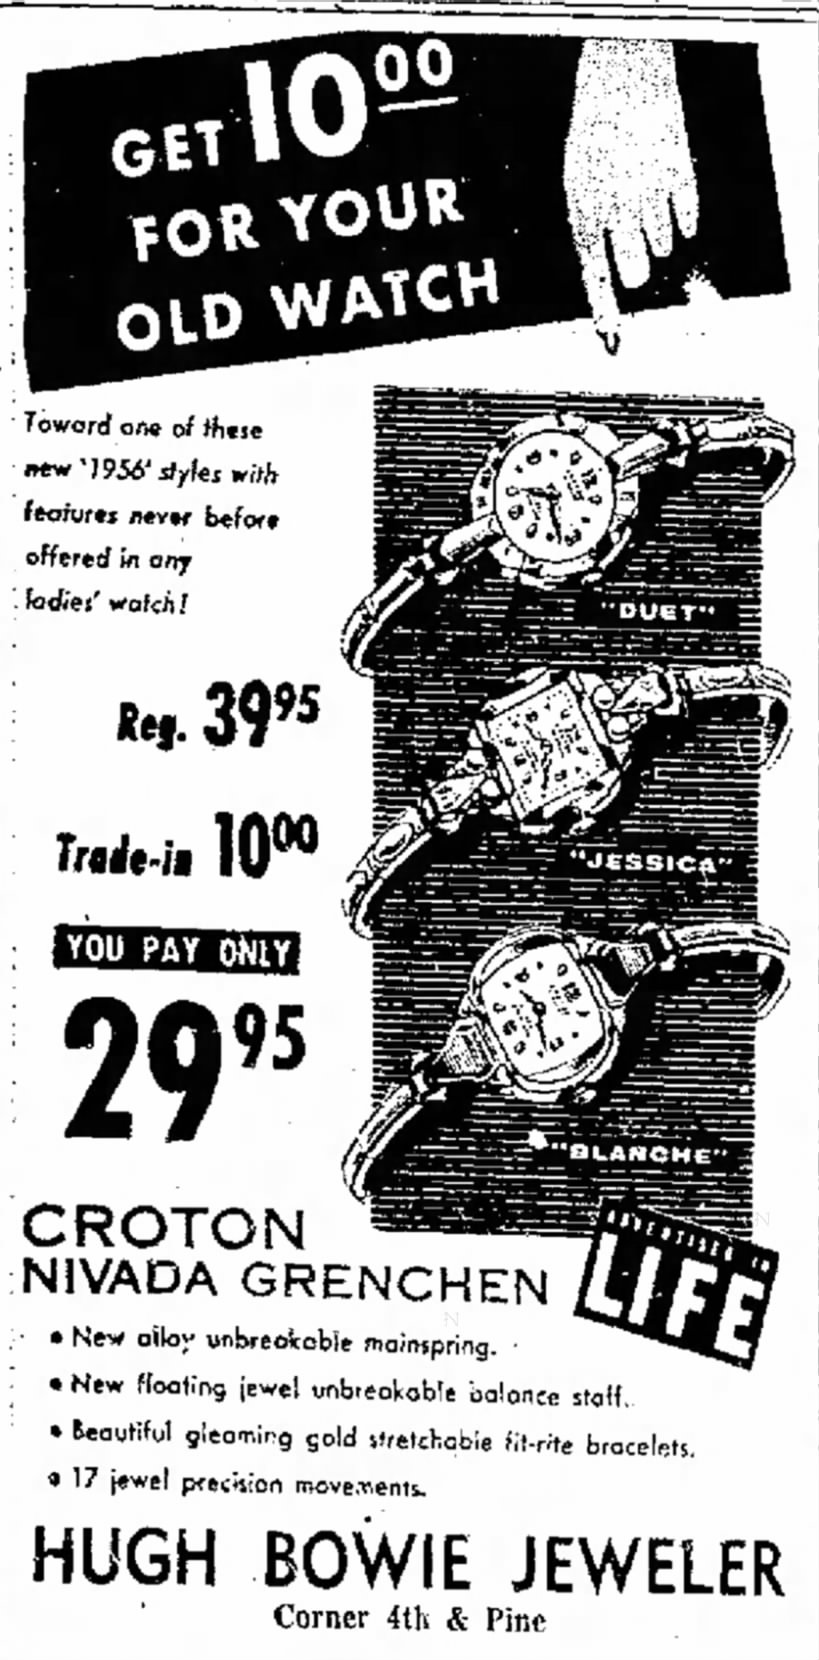 Croton Ad
15 April 1956